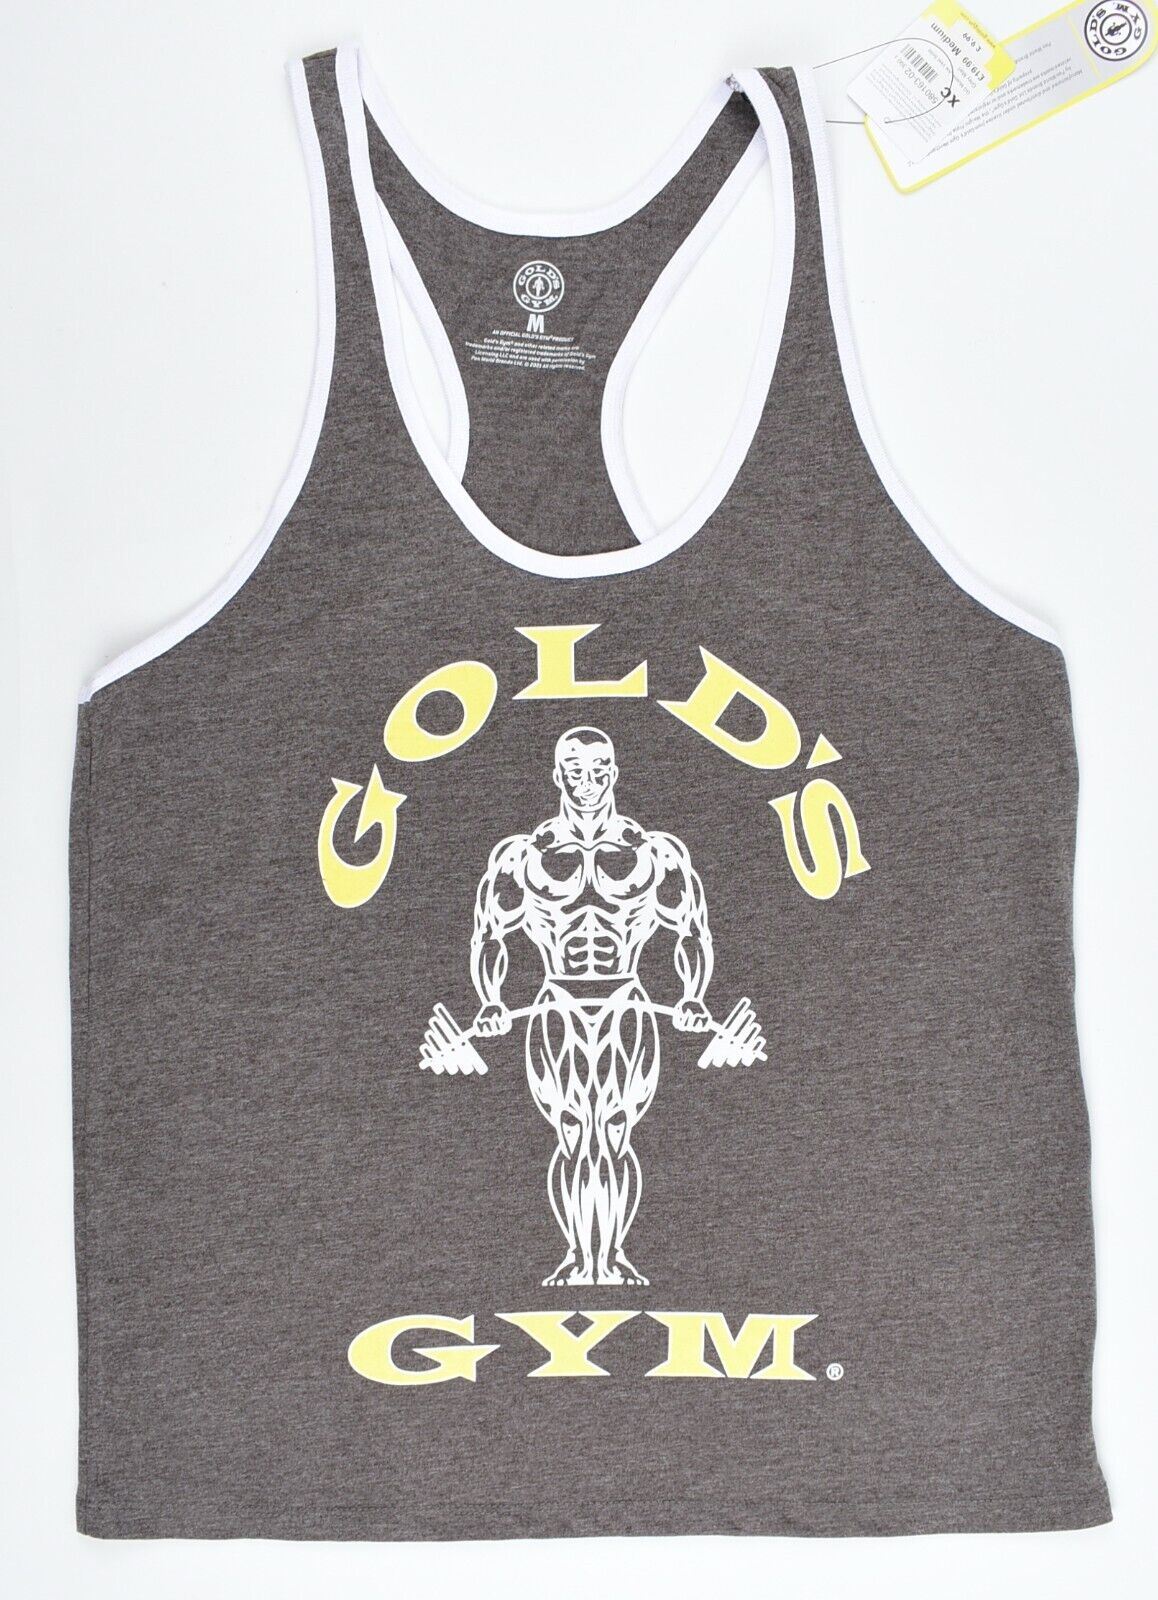 GOLD'S GYM Core Collection Men's MUSCLE JOE Vest Top, Grey Marl, size M